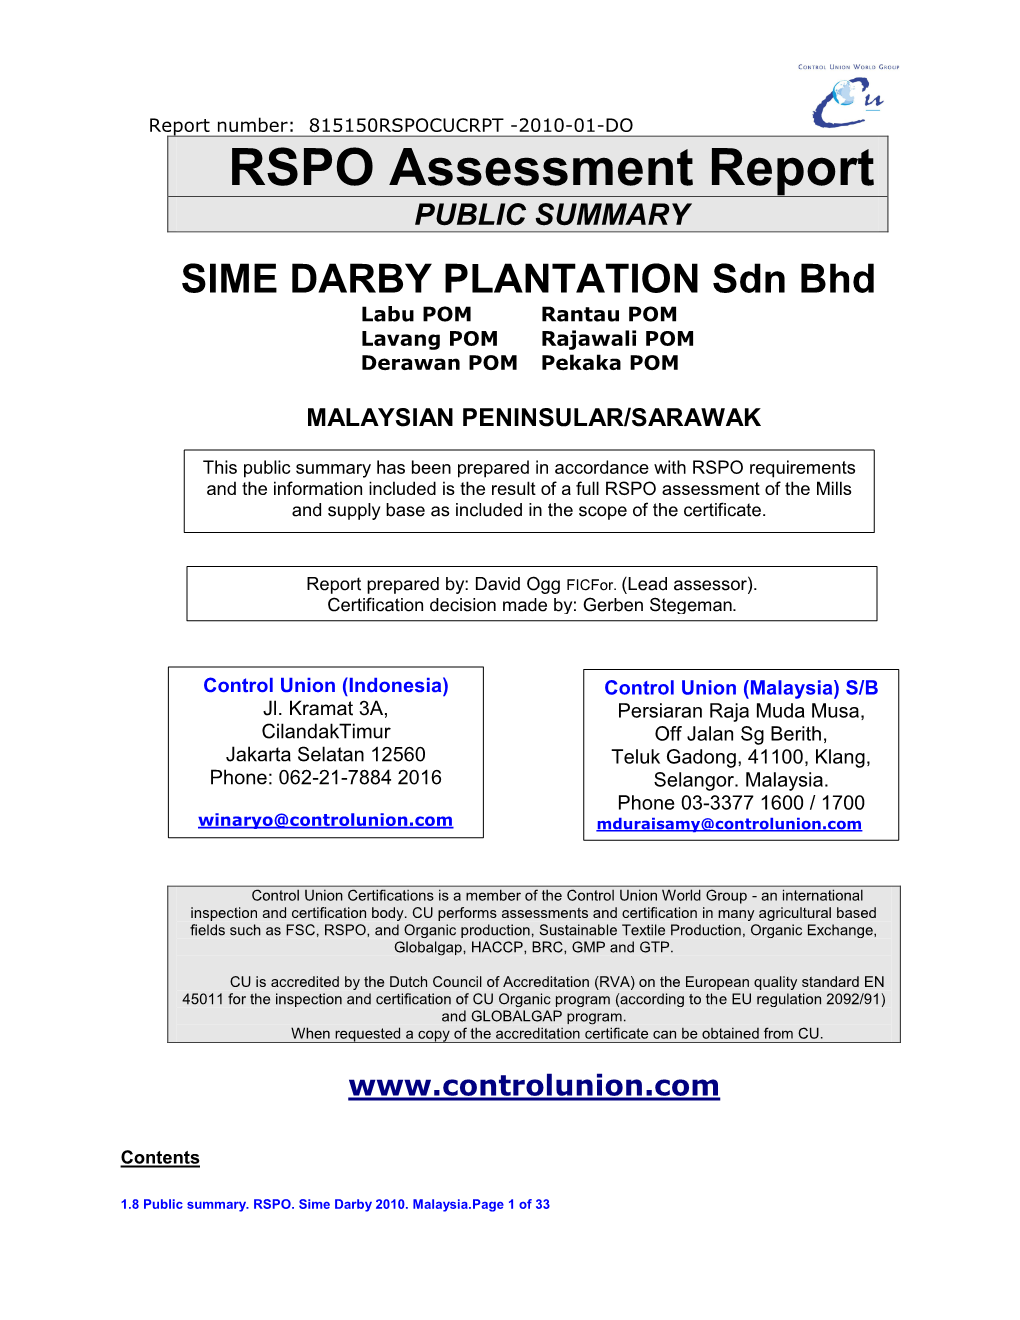 RSPO Assessment Report PUBLIC SUMMARY